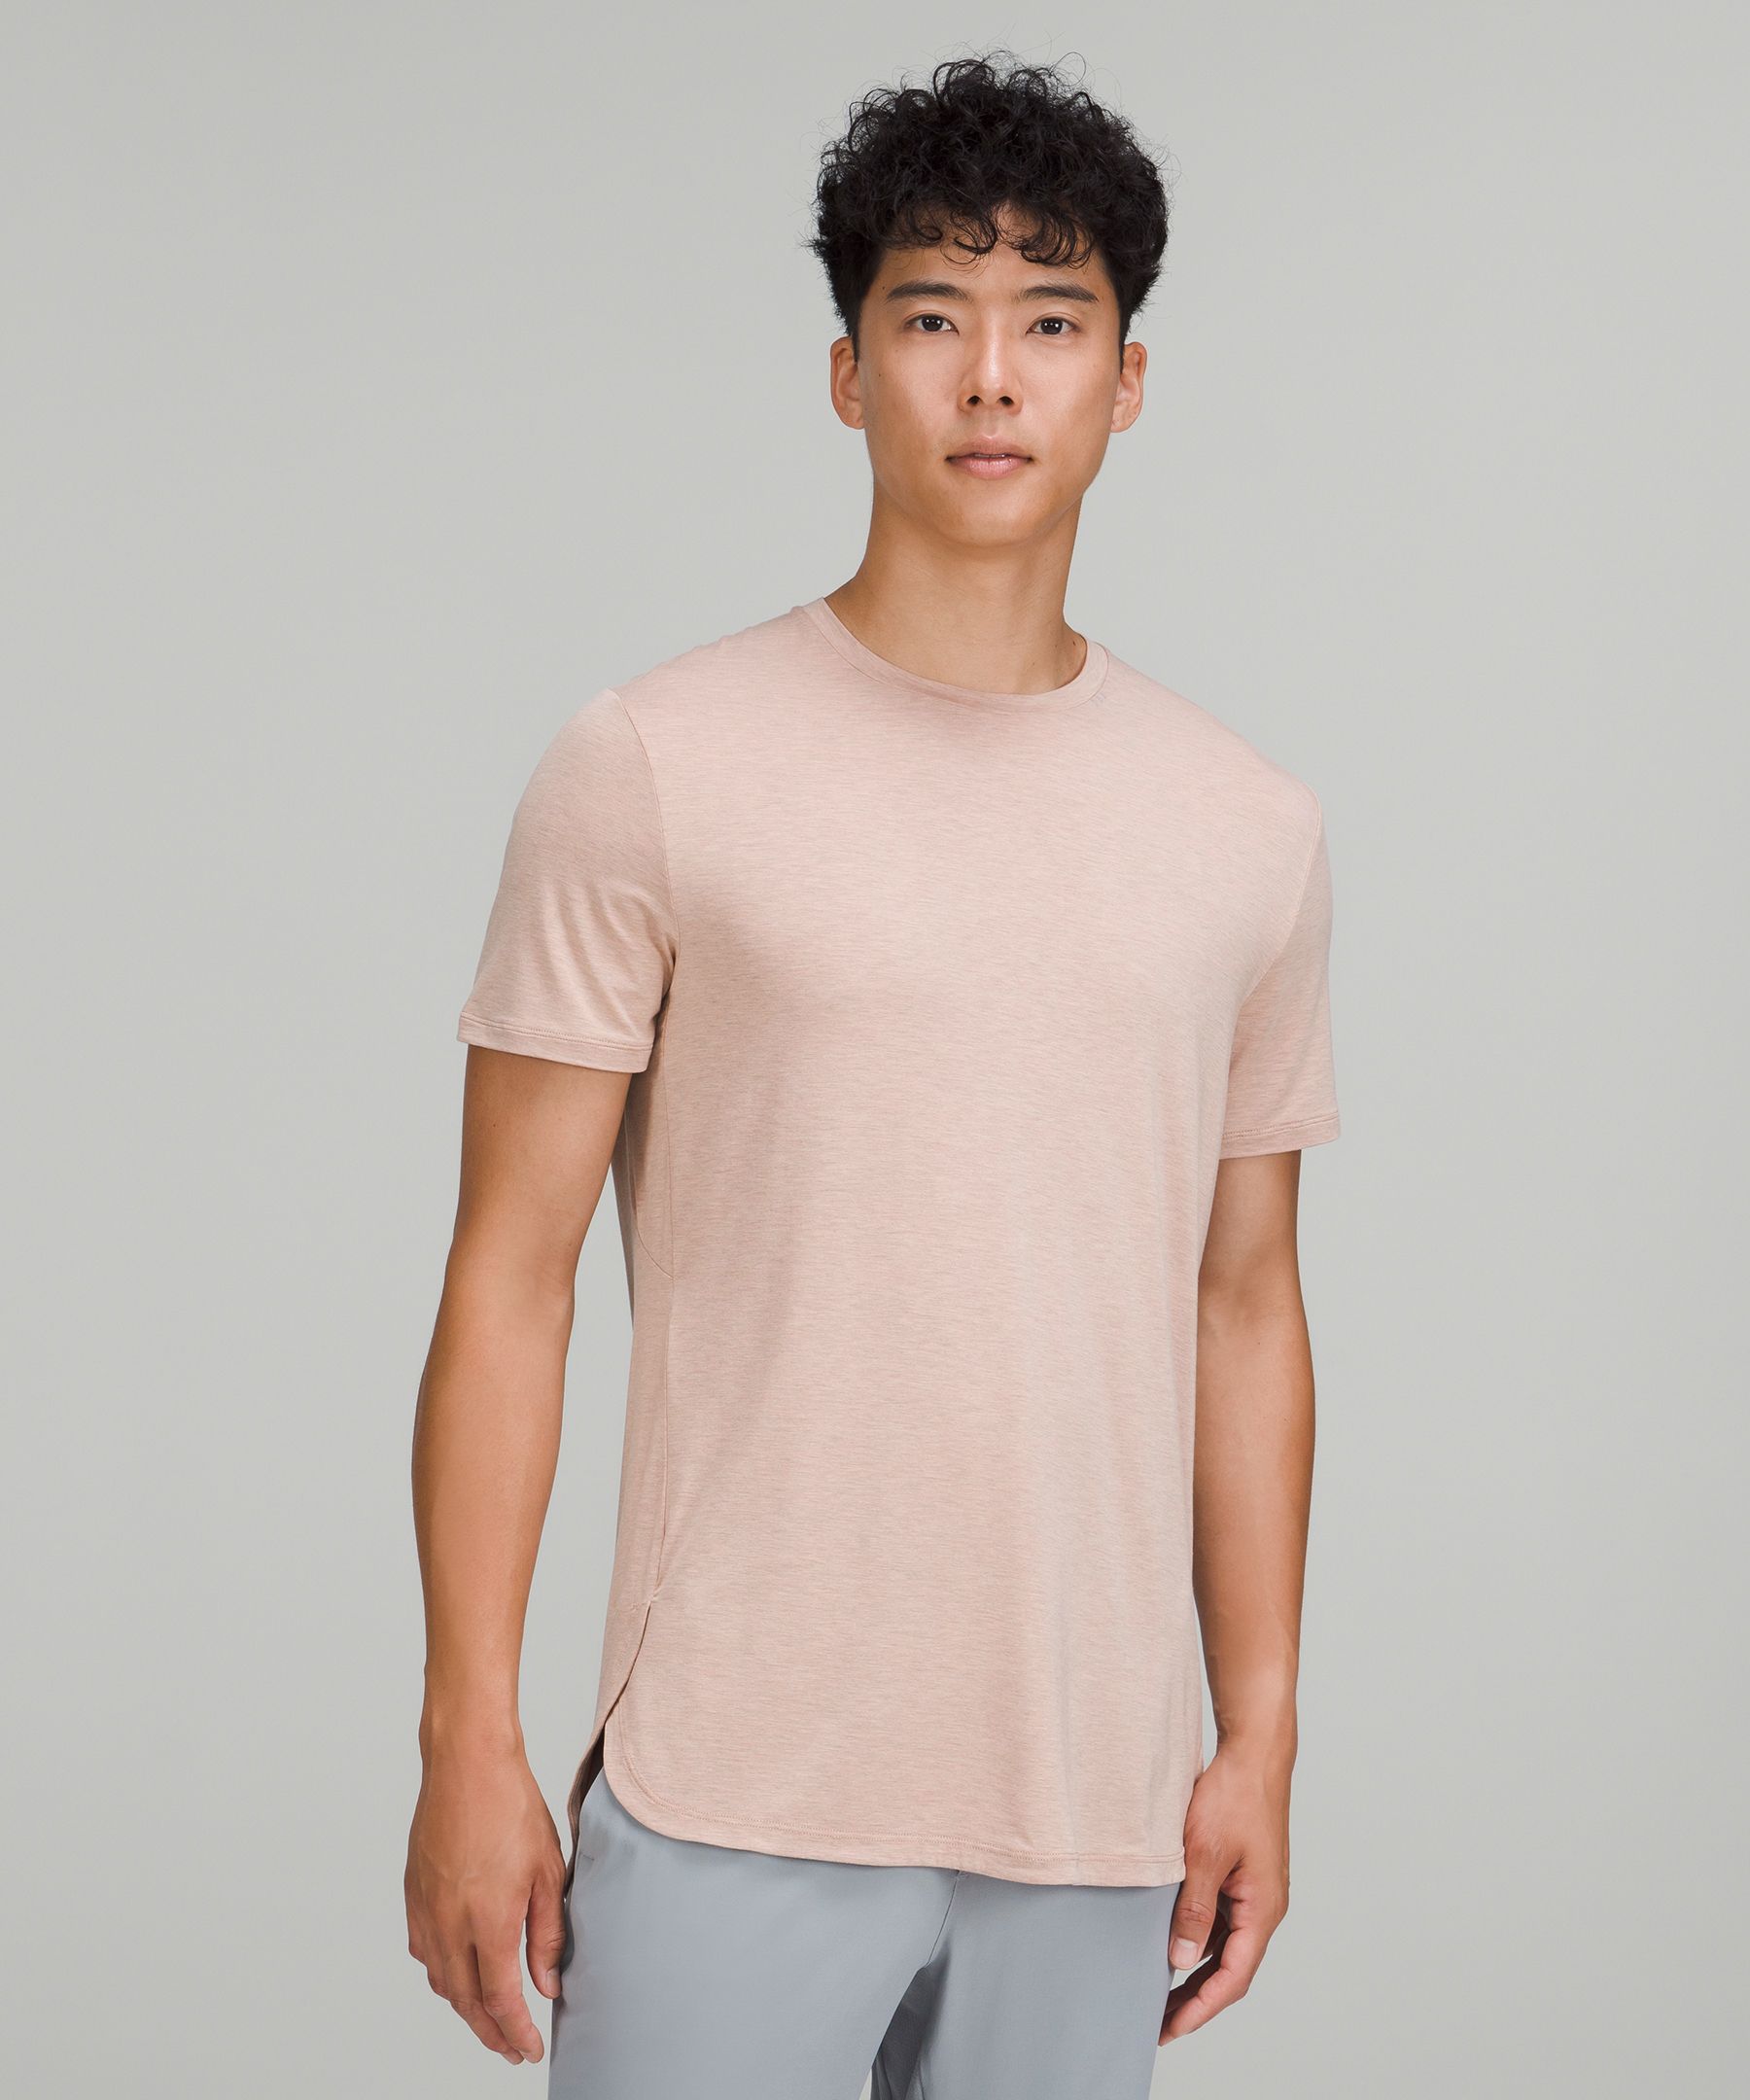 Lululemon Balancer Short Sleeve Shirt